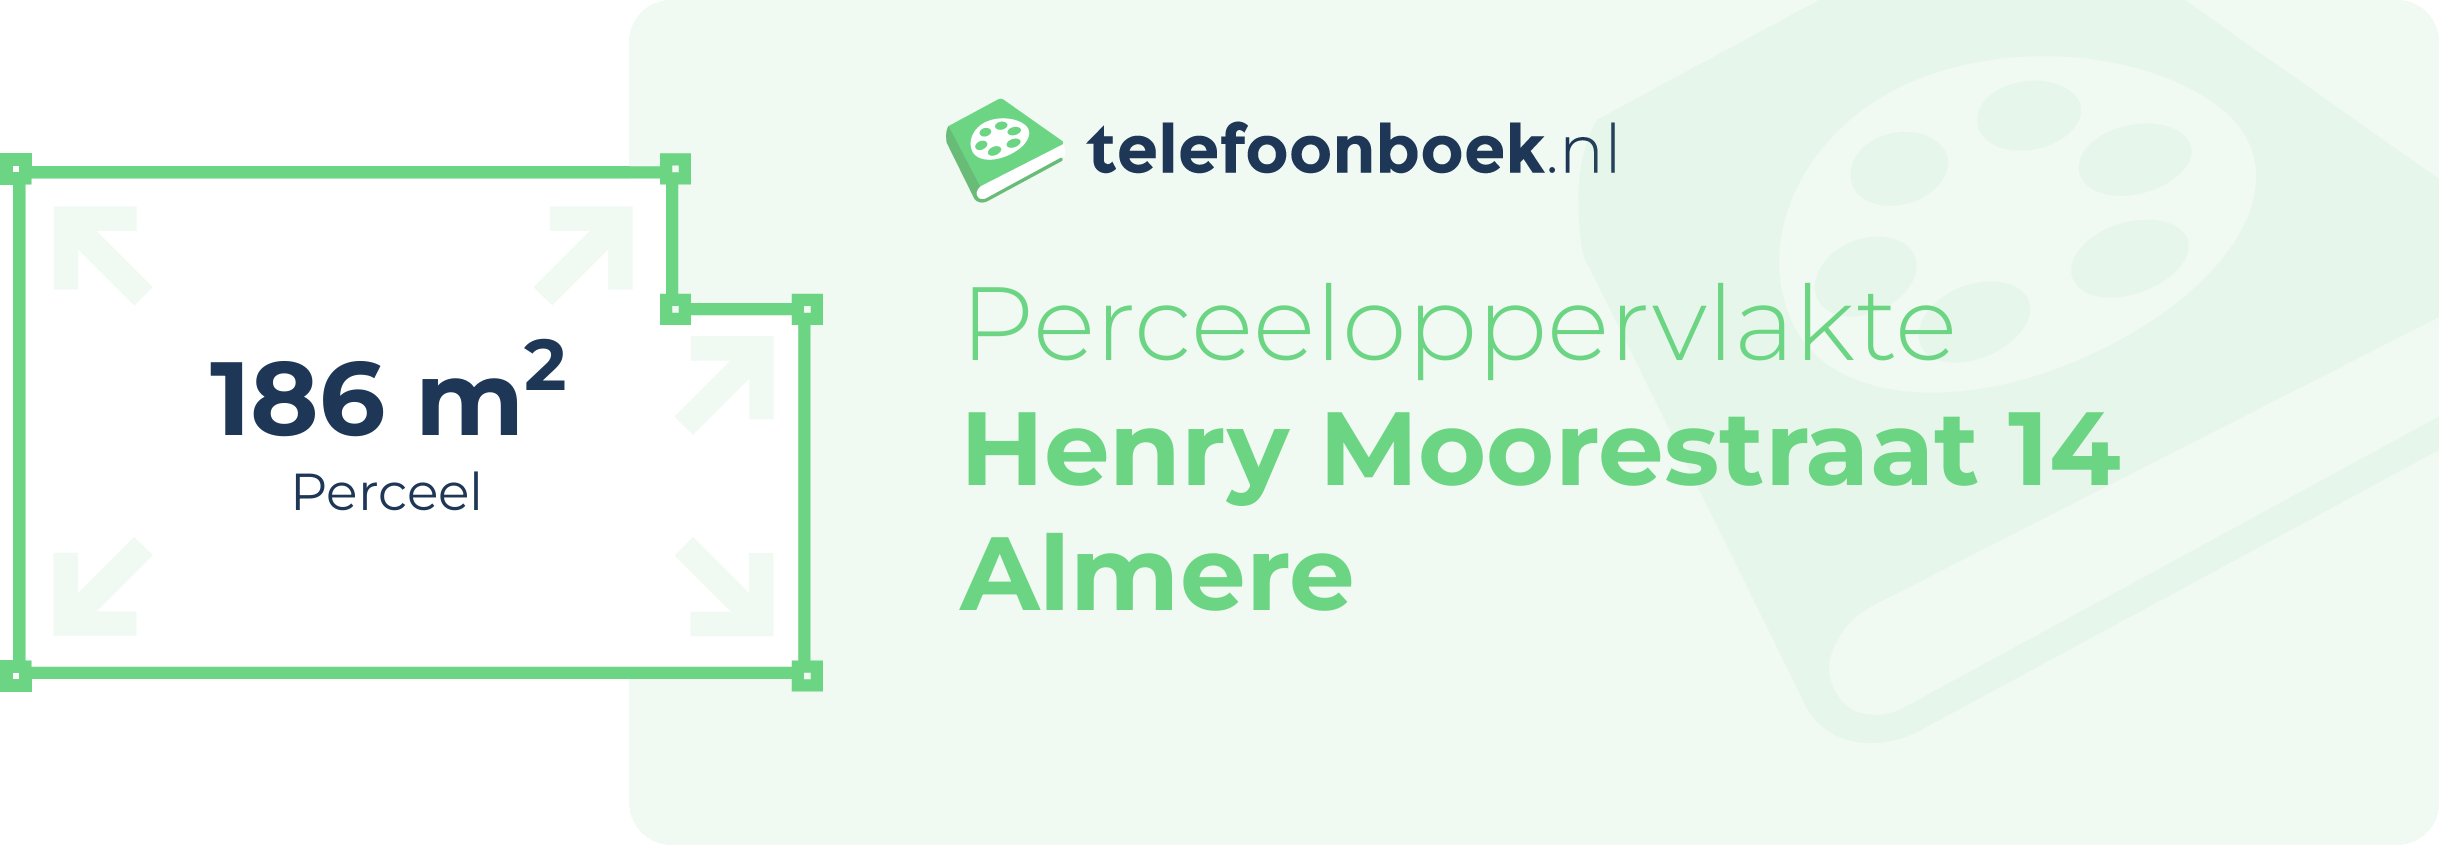 Perceeloppervlakte Henry Moorestraat 14 Almere